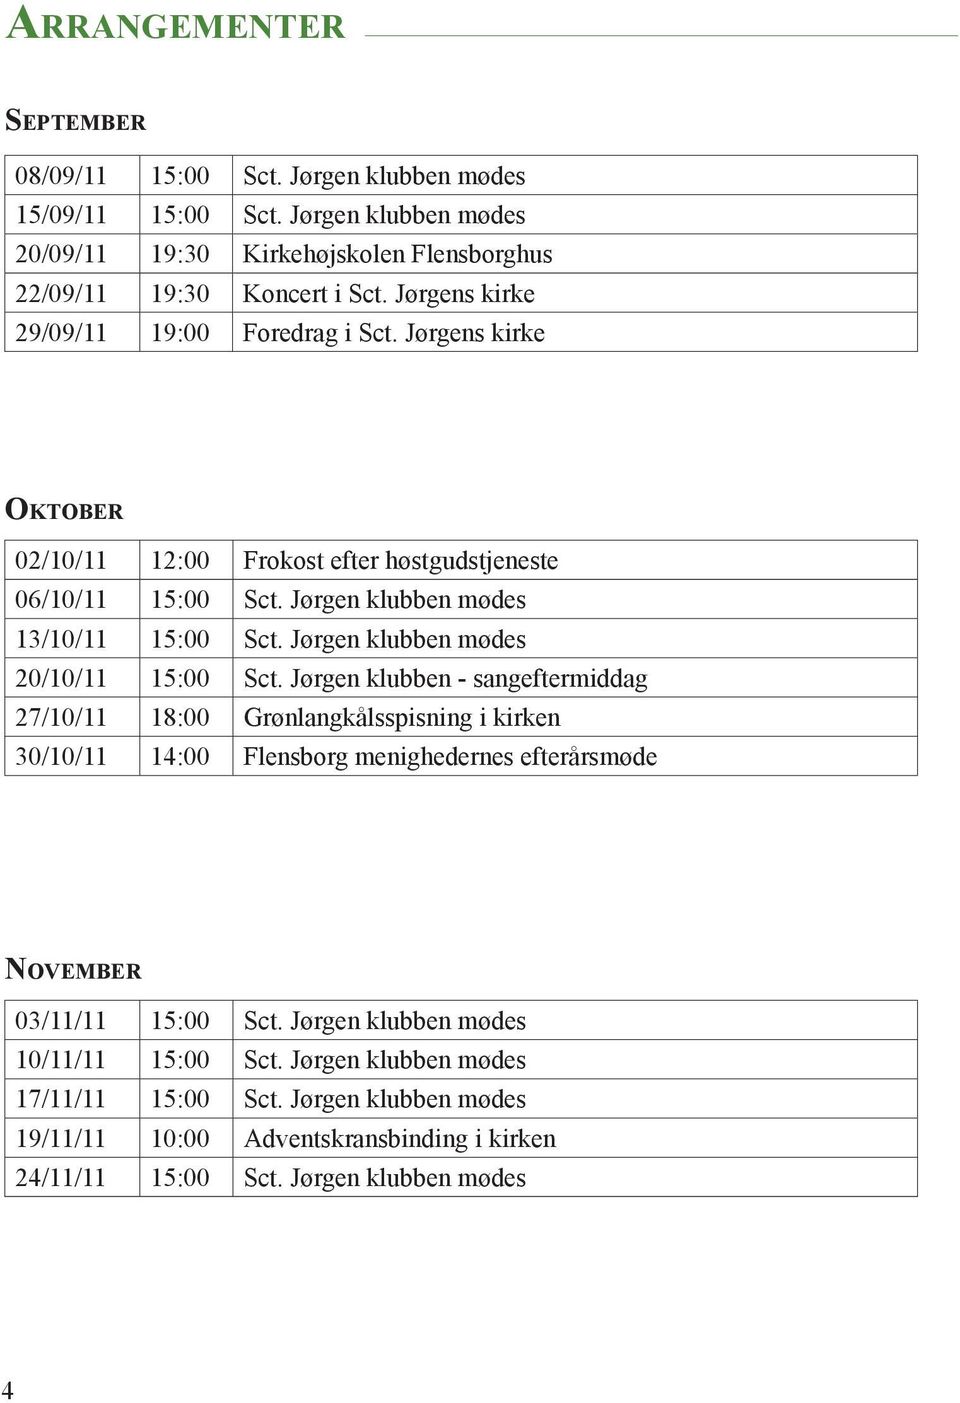 Jørgen klubben mødes 20/10/11 15:00 Sct.